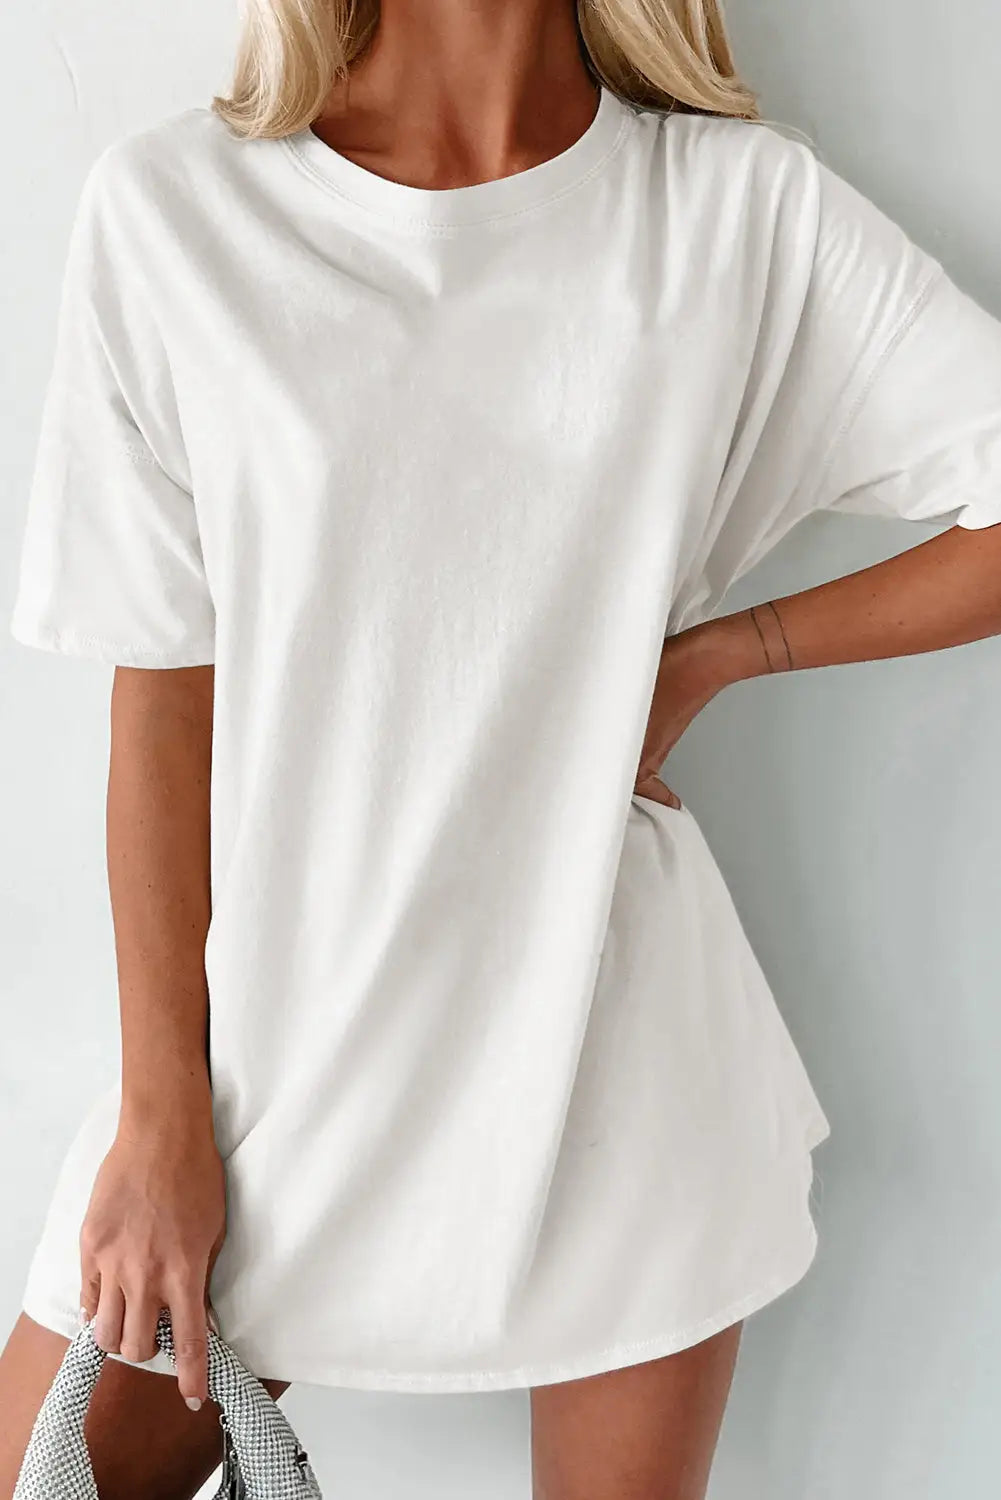 White basic tunic t shirt - s / 95% cotton + 5% elastane - t-shirts